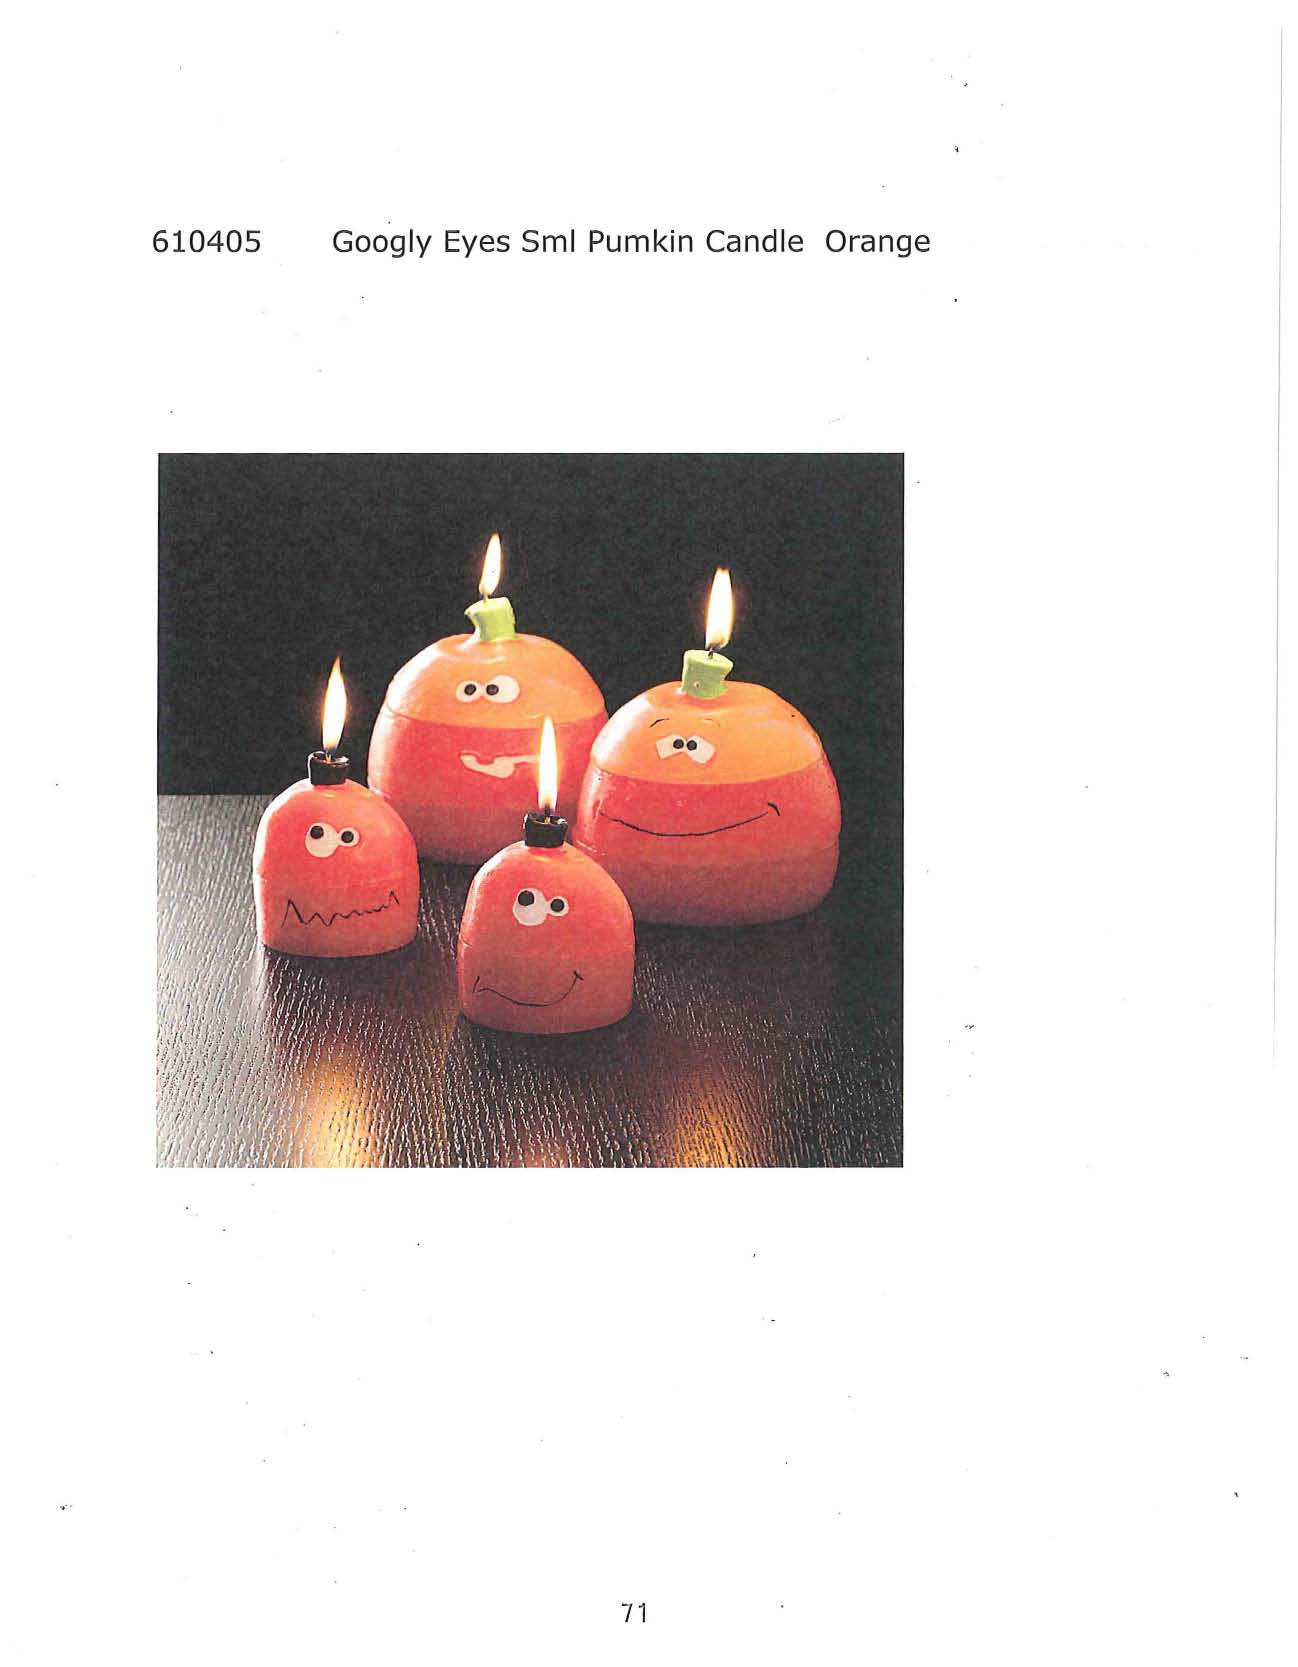 Googly Eyes Small Pumpkin Candle - Orange